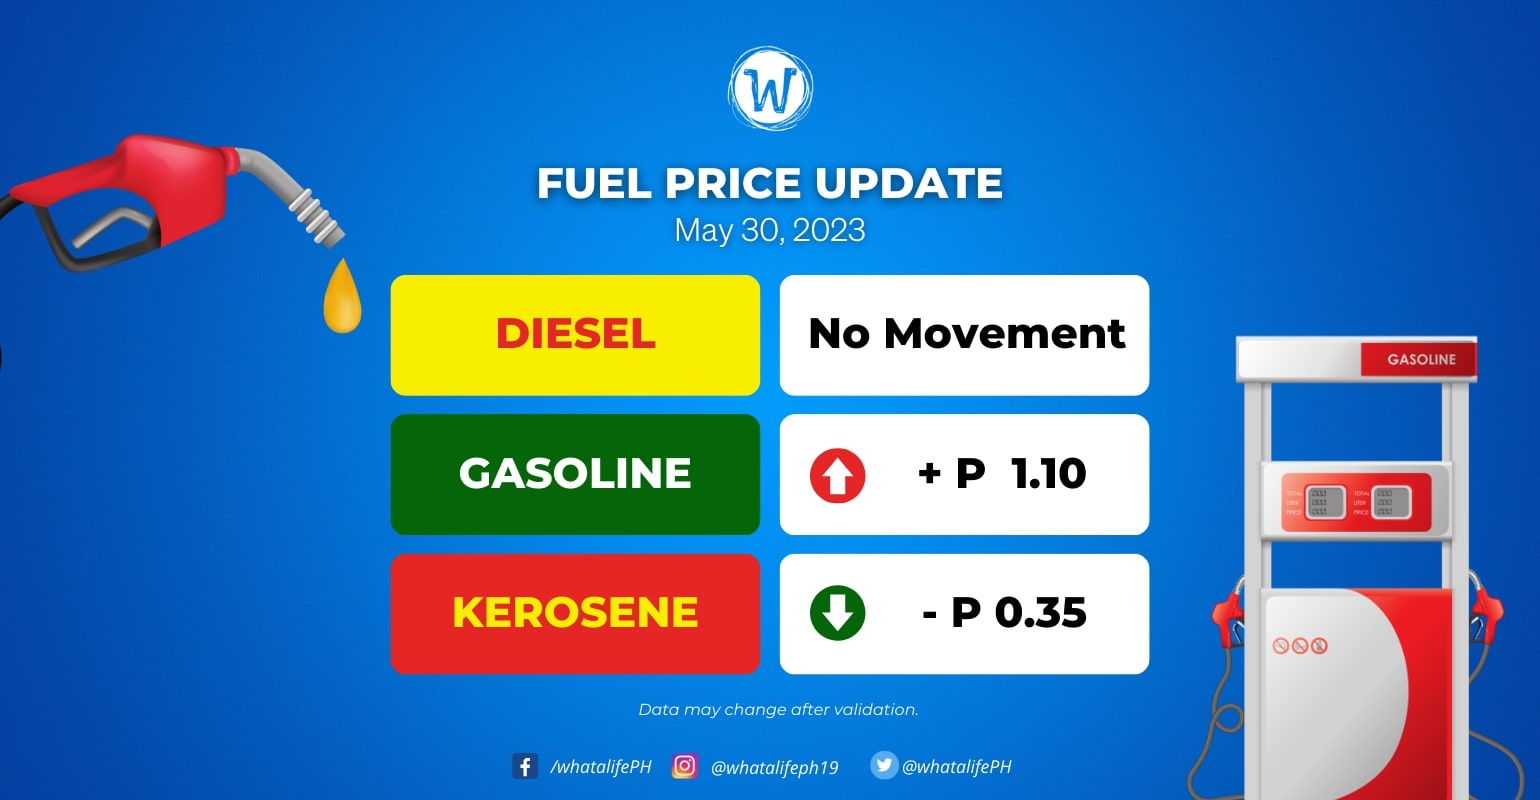 Fuel price adjustment effective May 30, 2023